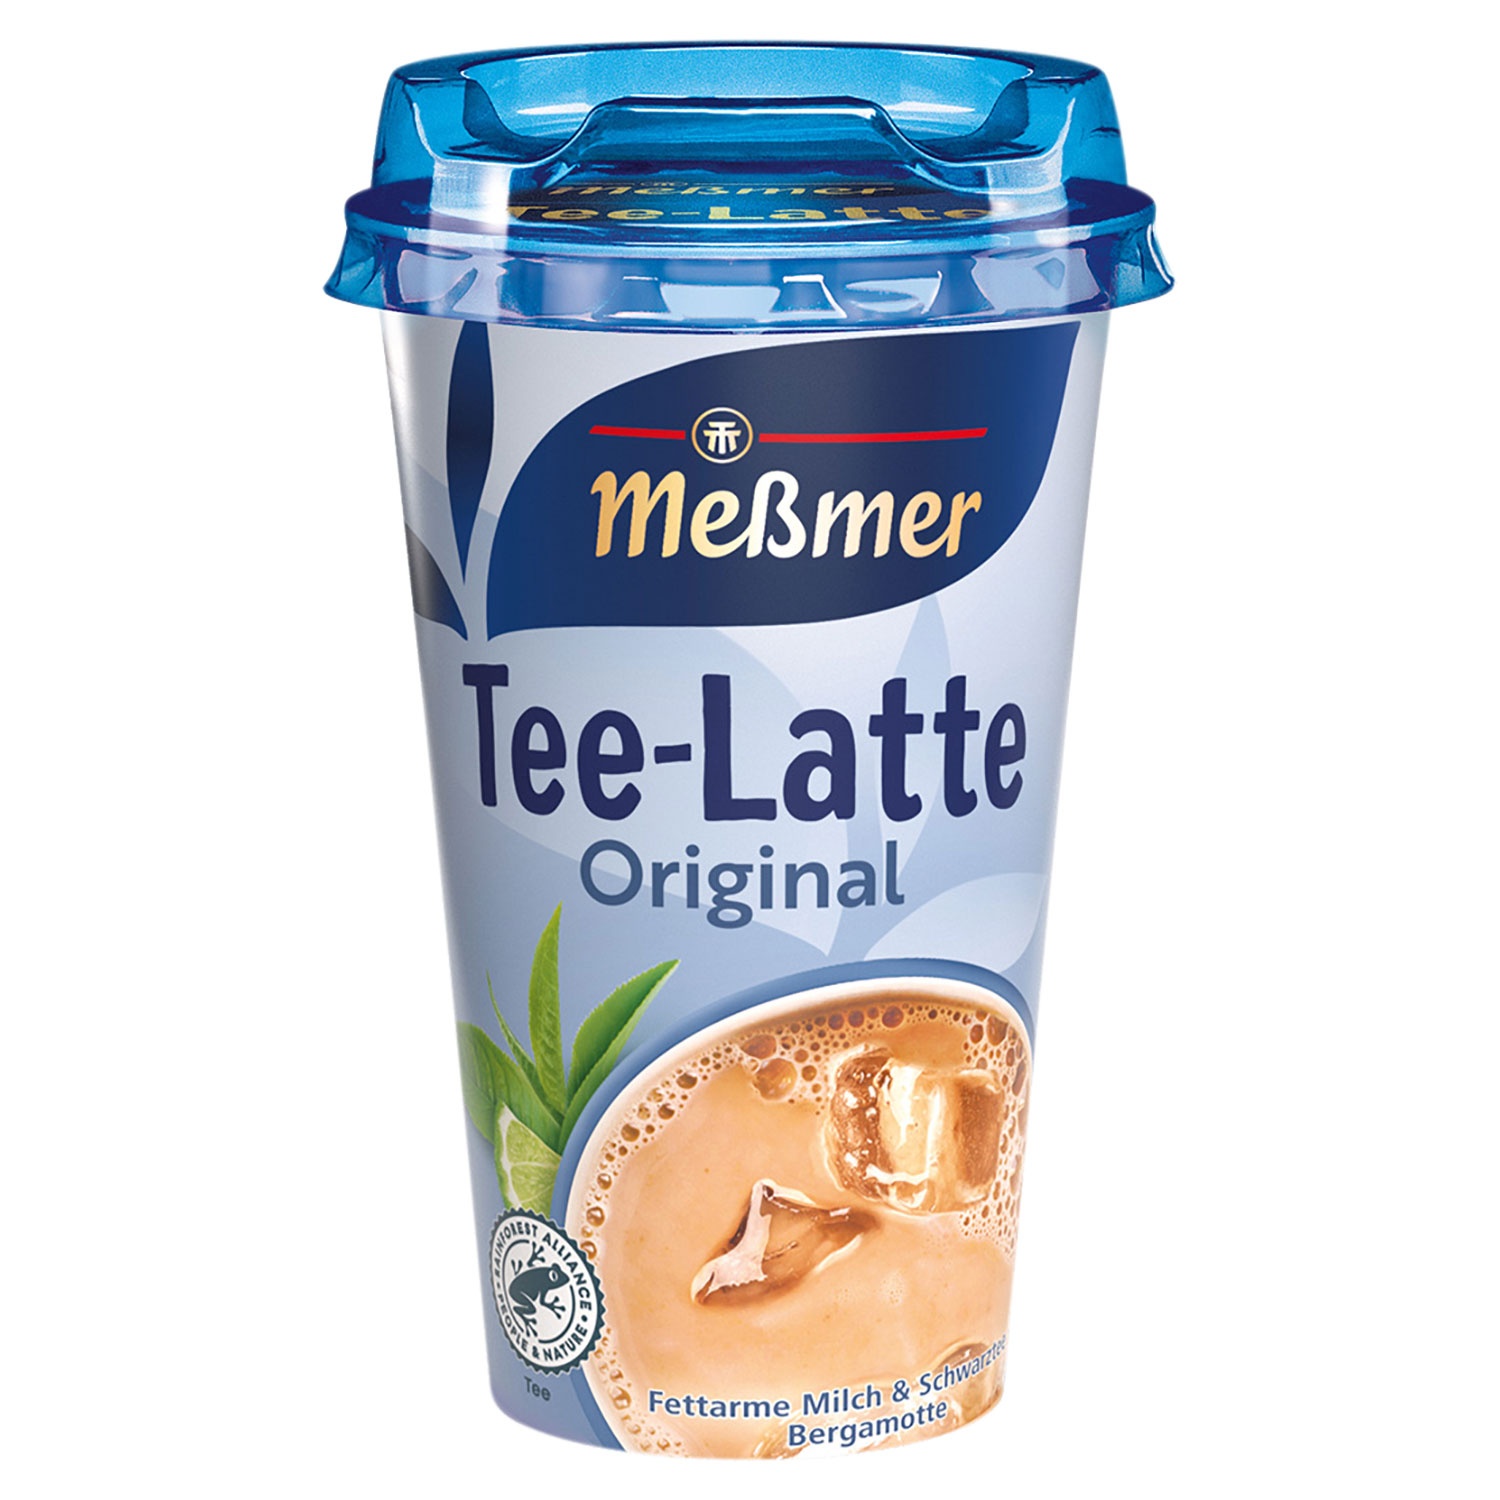 MESSMER Tee-Latte 230 ml